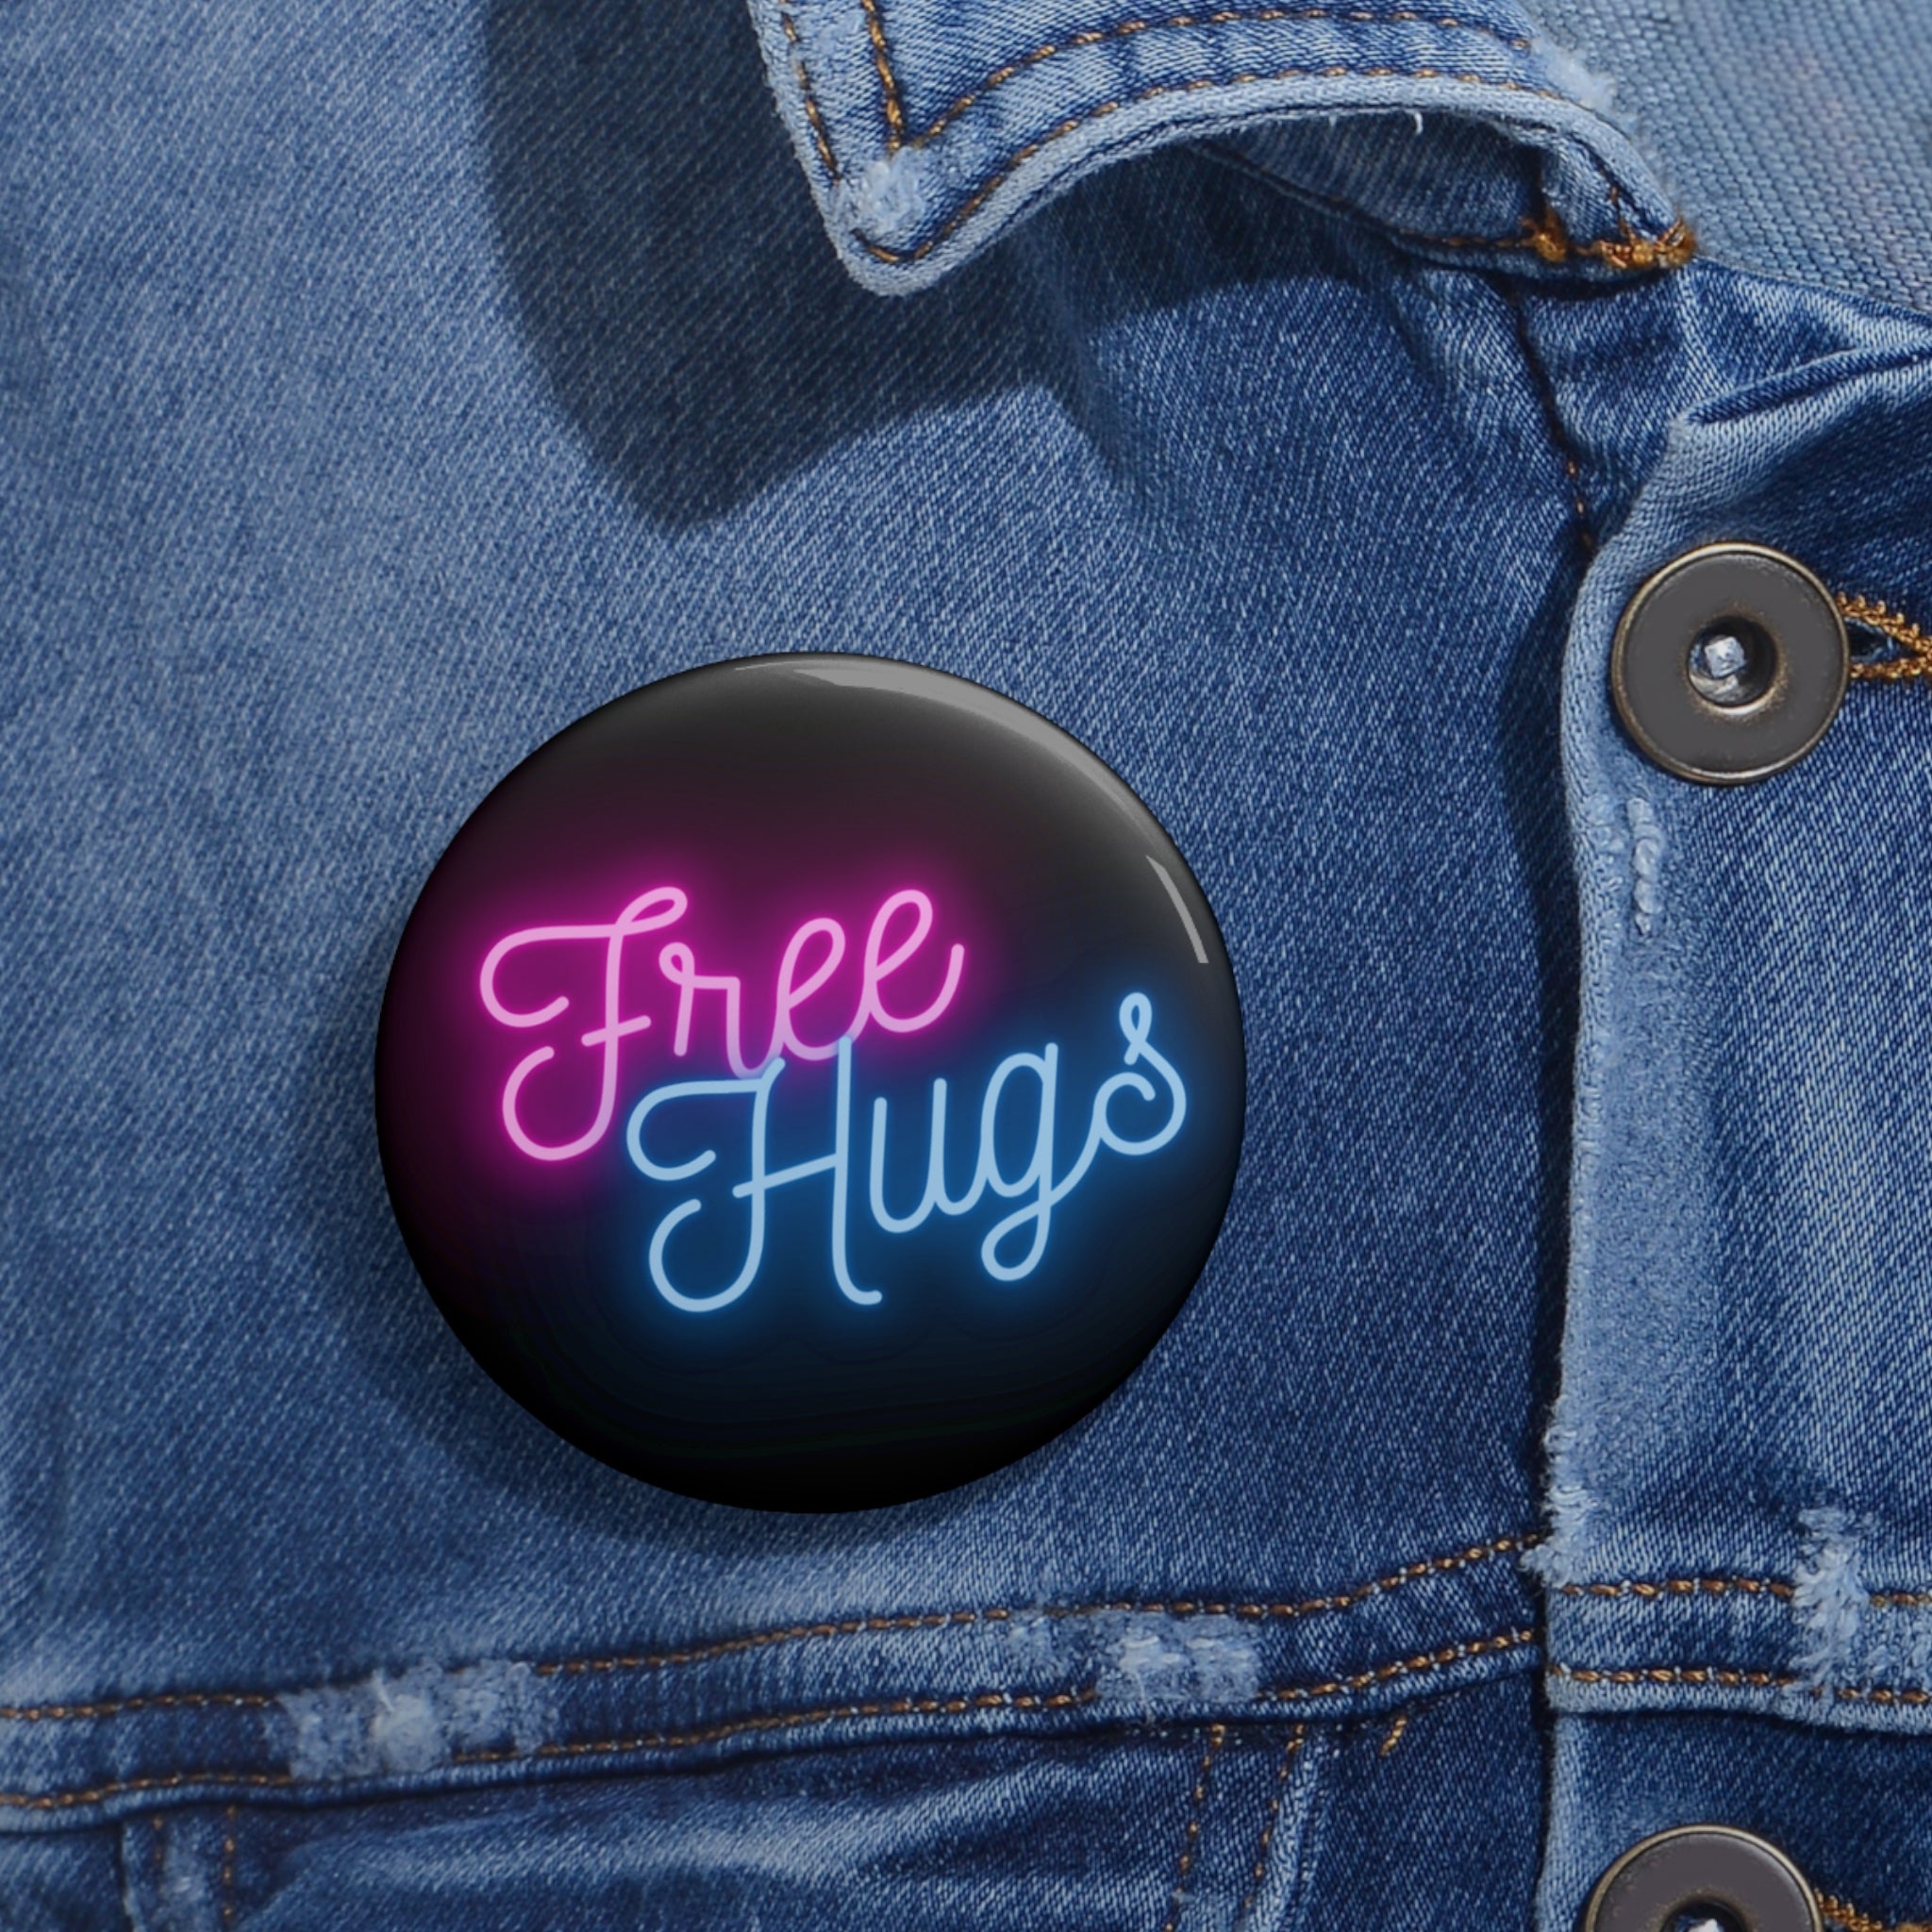 Free Hugs Pin Button